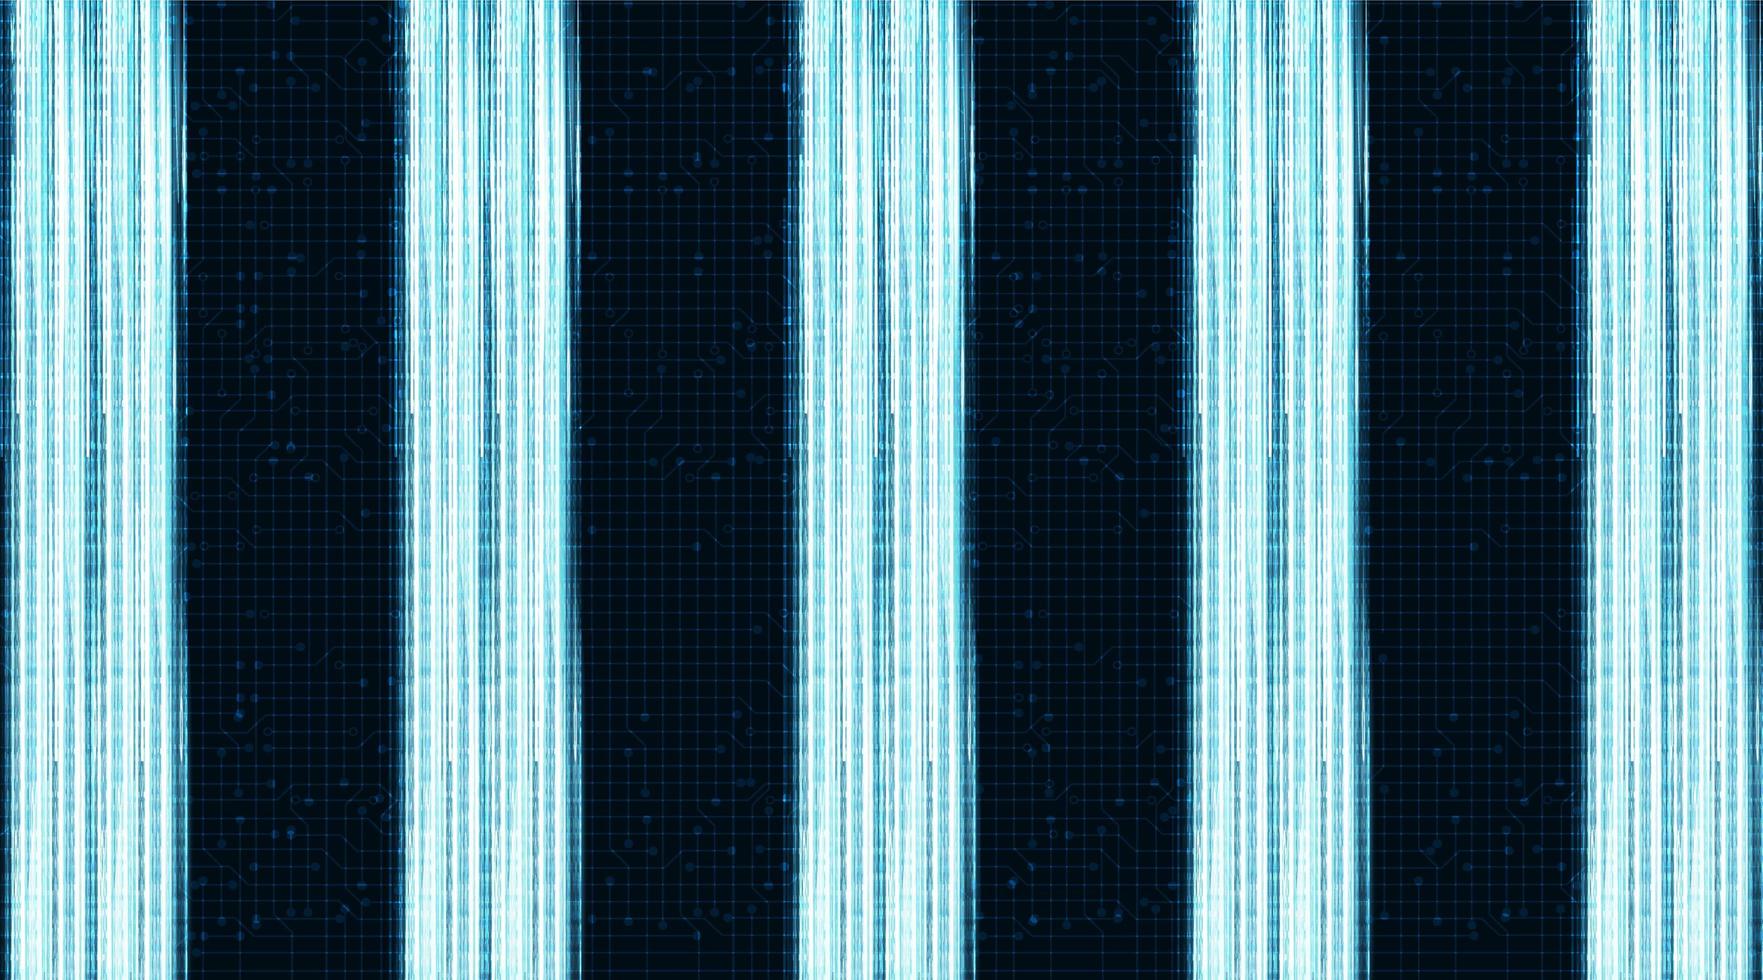 cyberljus på kretsens mikrochipbakgrund vektor